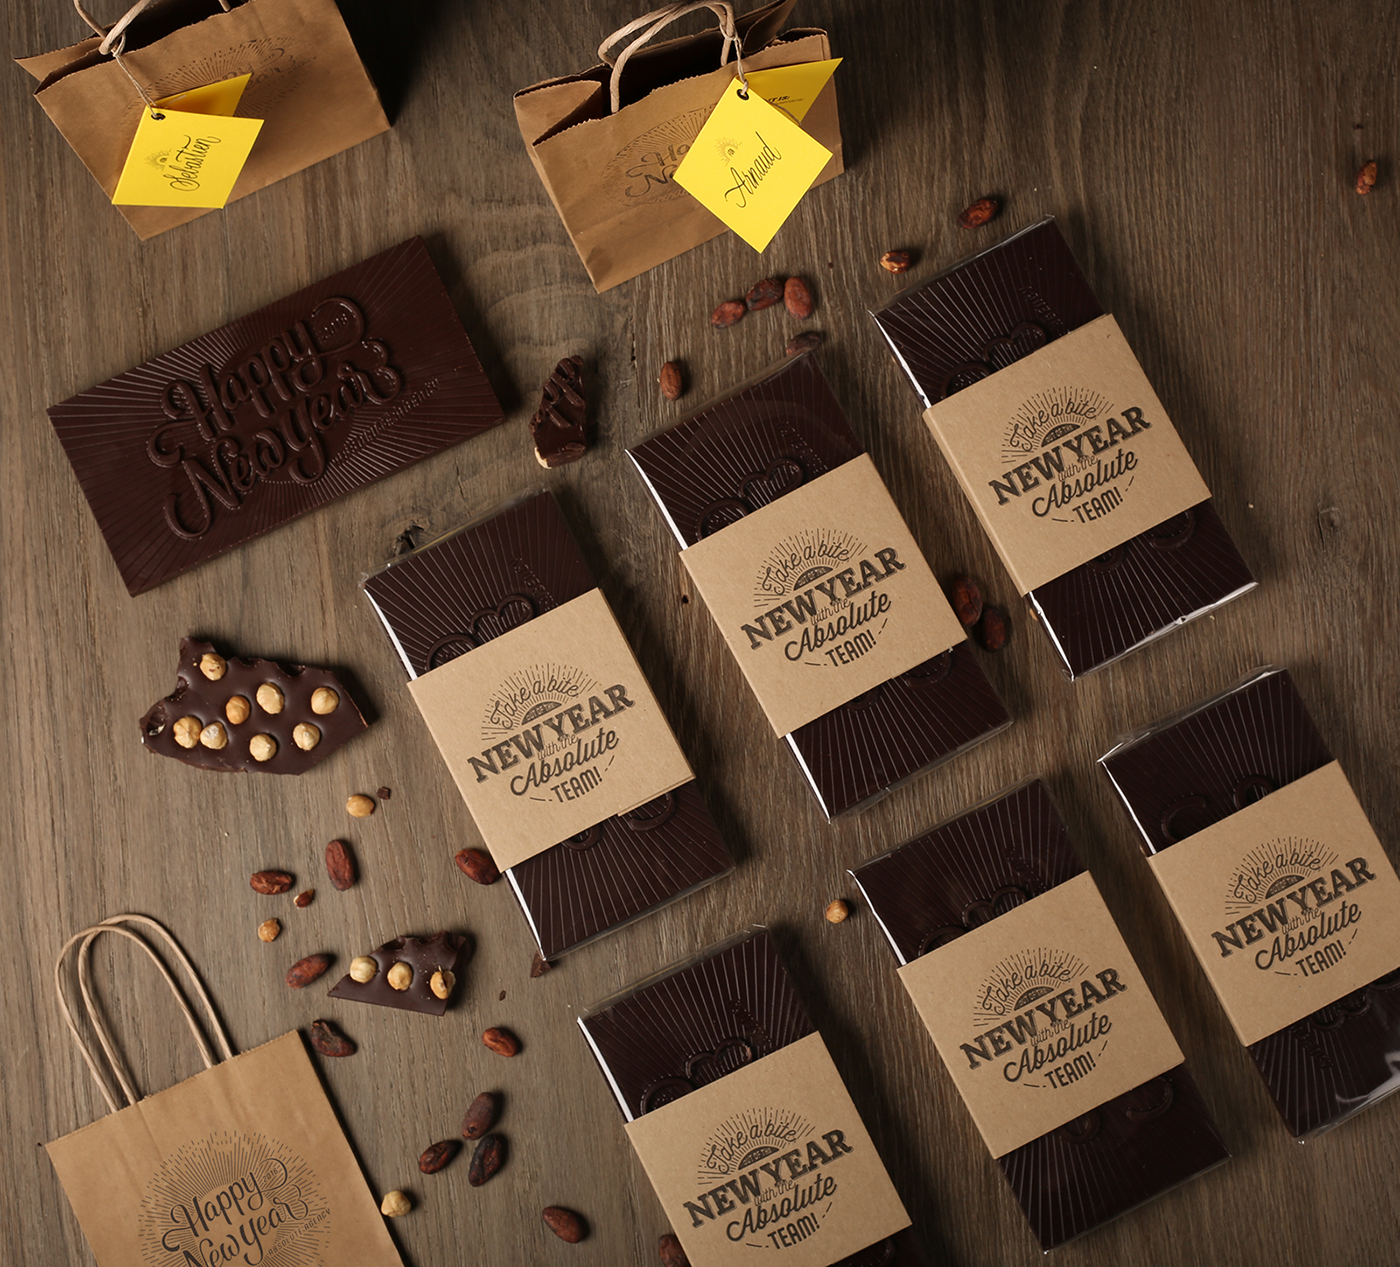 calligraphie imprimerie heidelberg chocolat video design packagings artisanat Noisette new year wishes gift communication agency motion design Food 